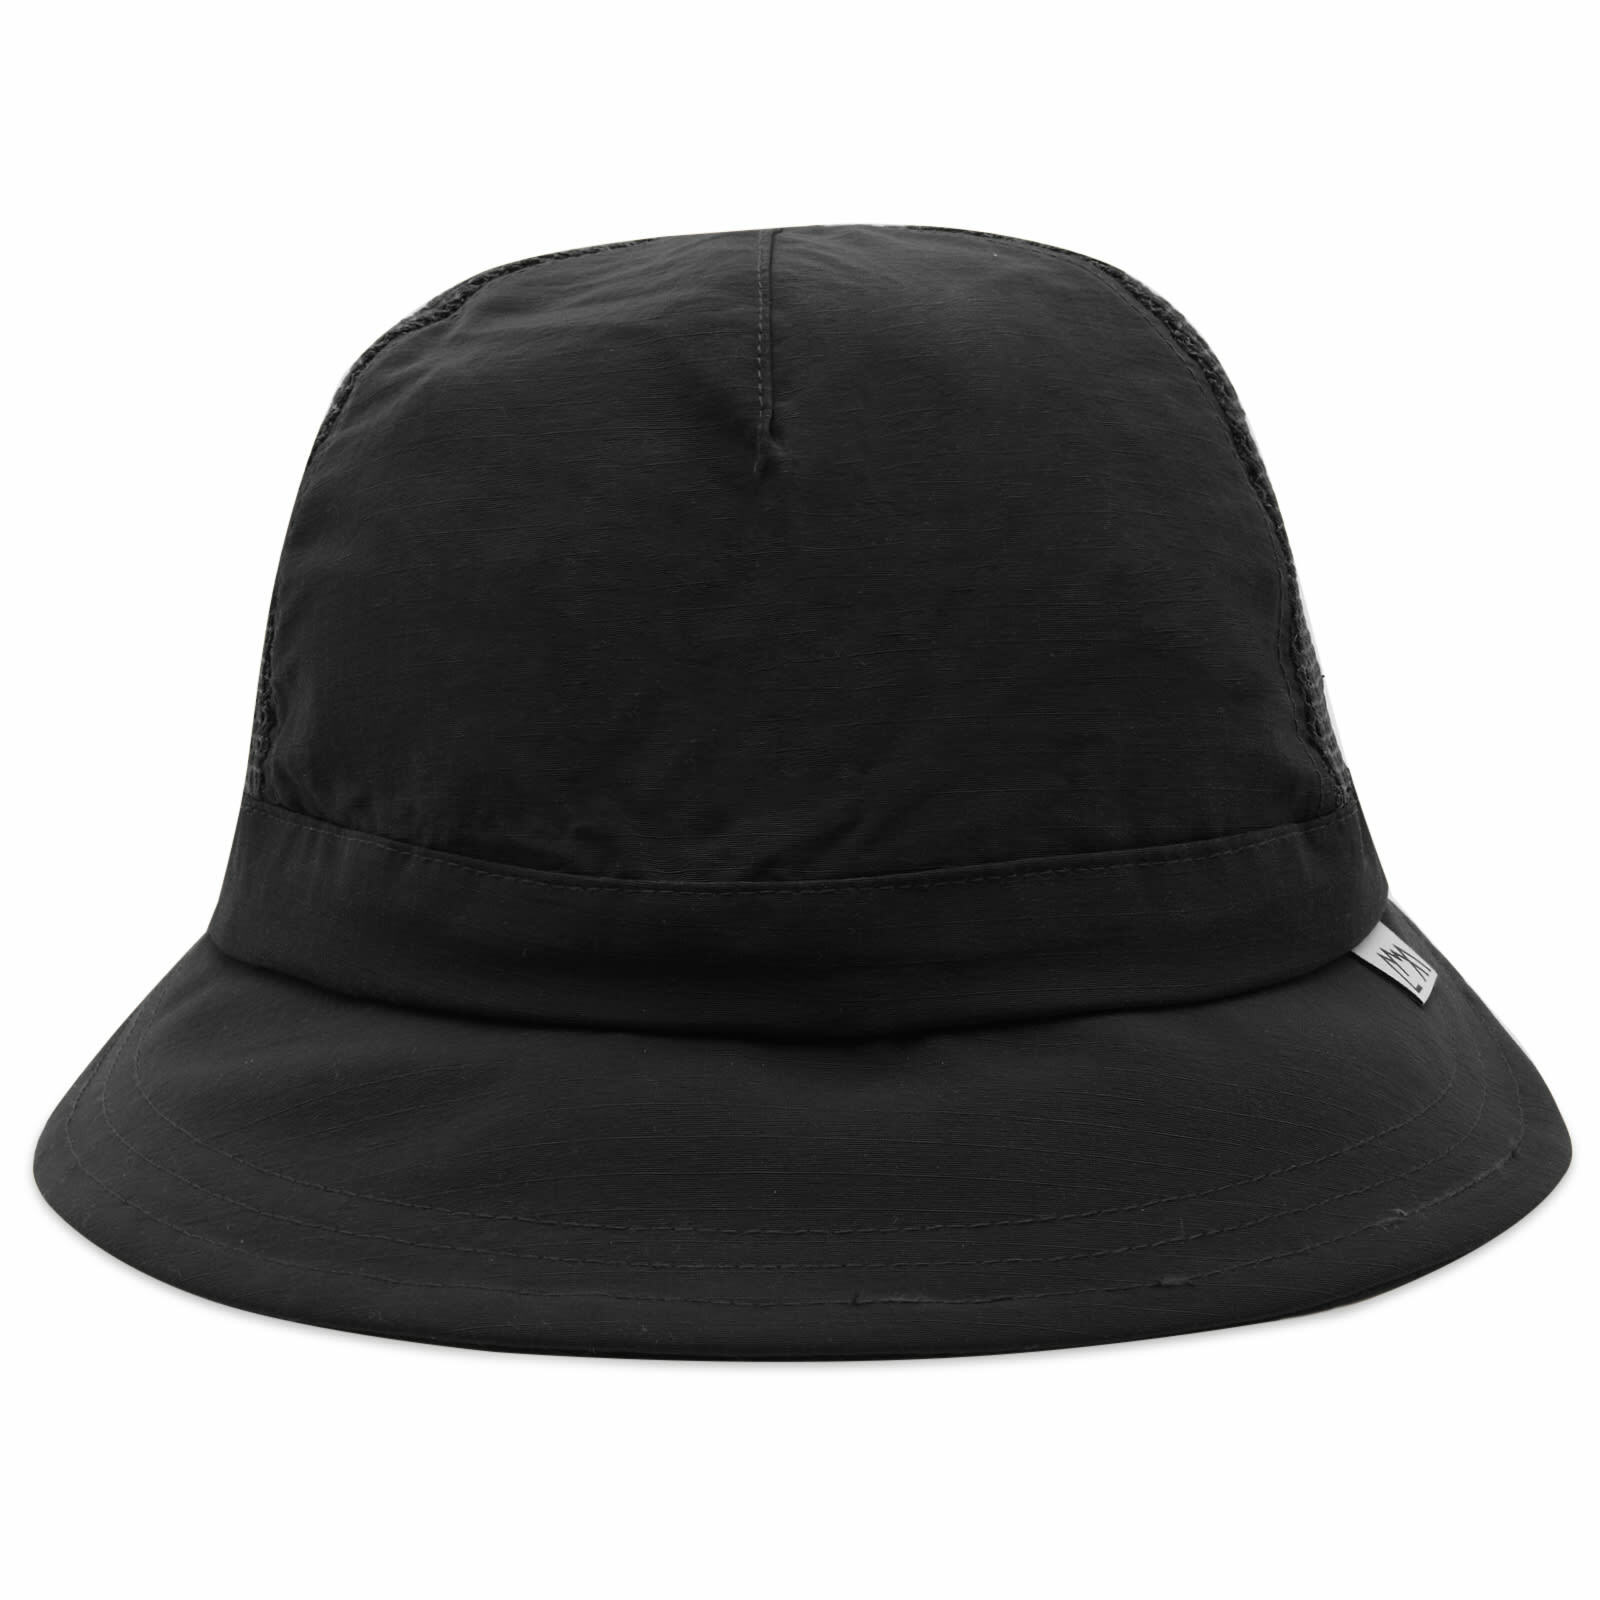 CMF Comfy Outdoor Garment Men's All Time Cap in Black CMF Comfy Outdoor ...